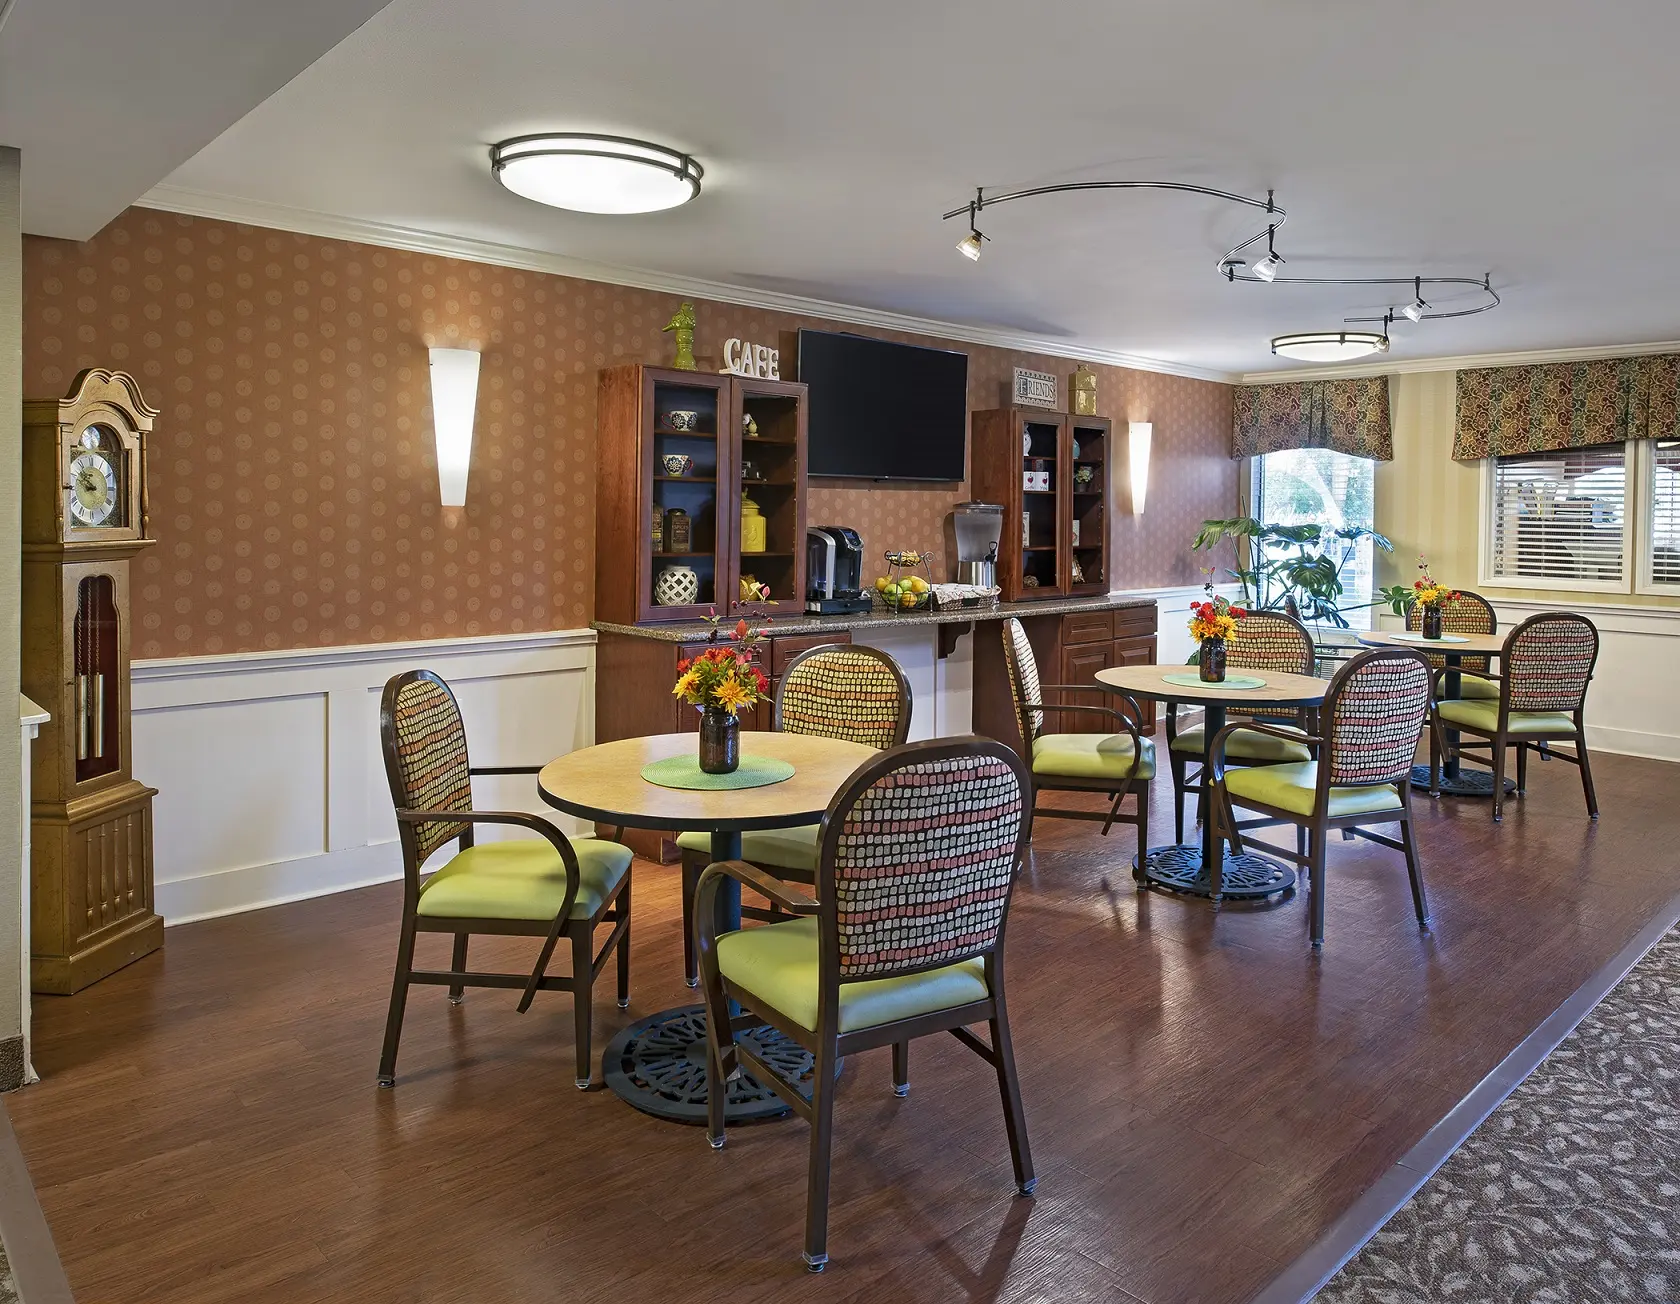 Dining area of American House Carpenter, a senior living community in Ypsilanti, Michigan